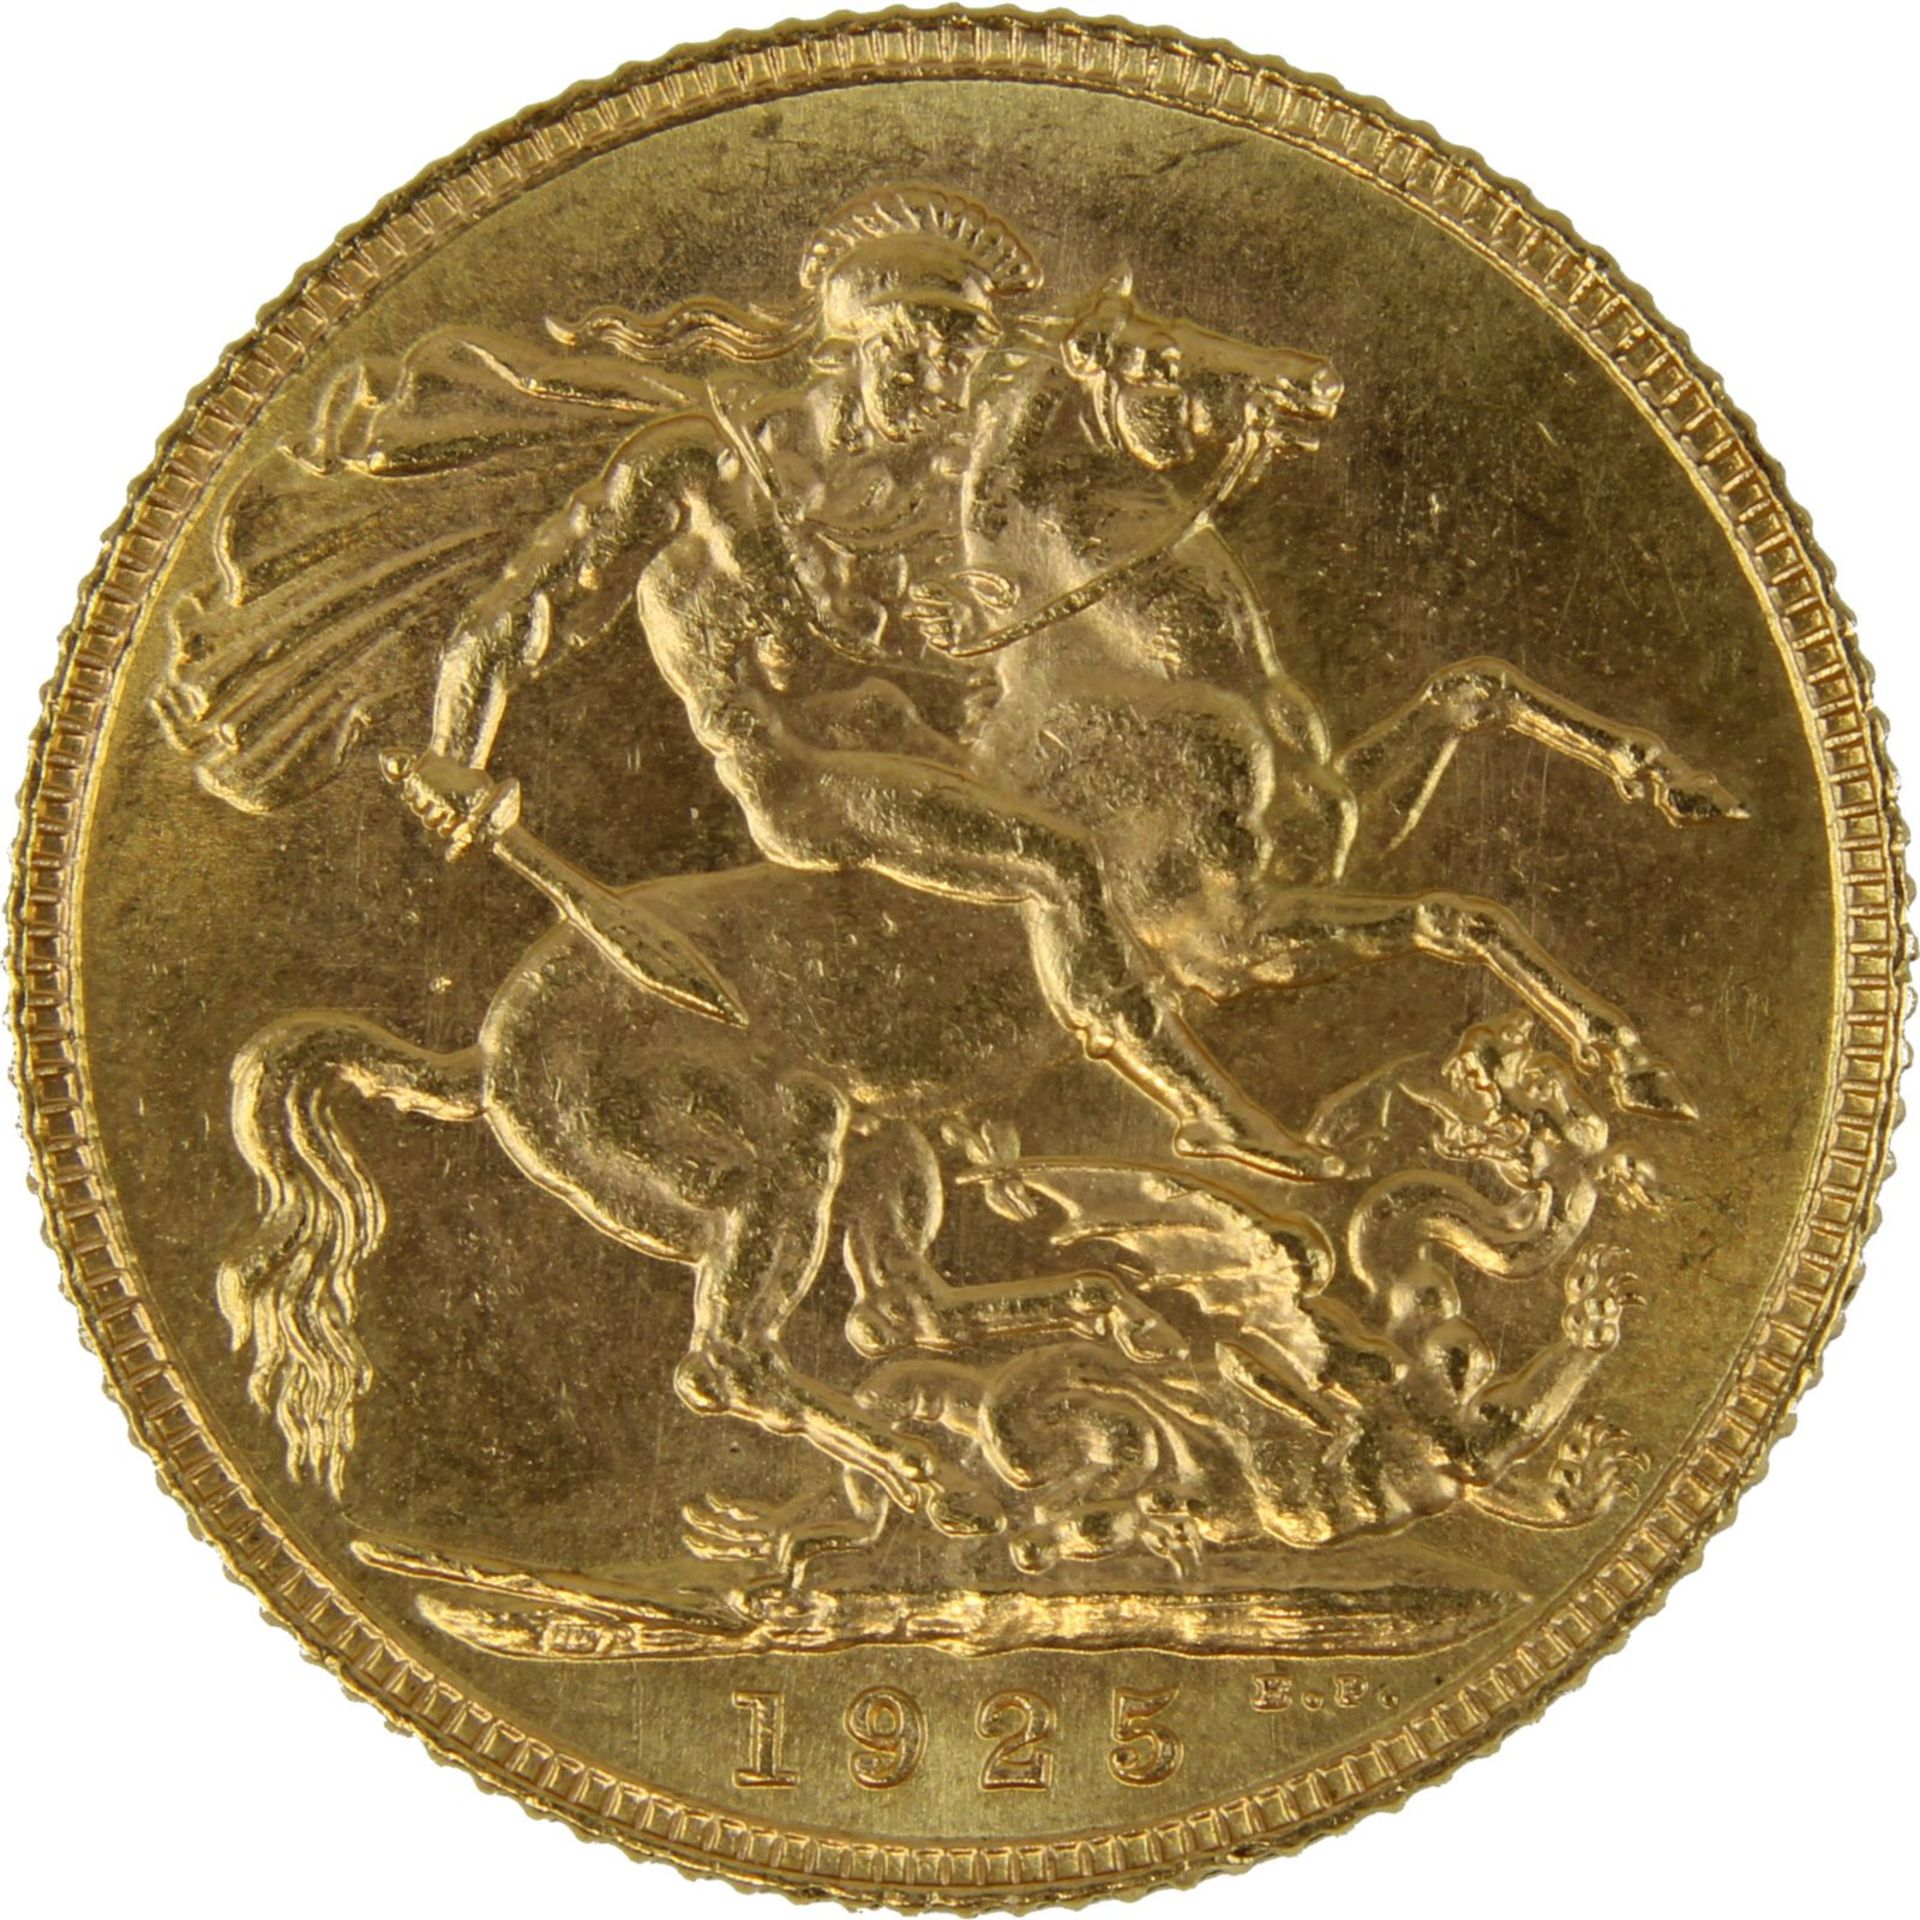 Goldmünze zu 1 Souvereign, England 1925, Avers: Kopf King George V nach links u. Umschrift, - Image 3 of 3